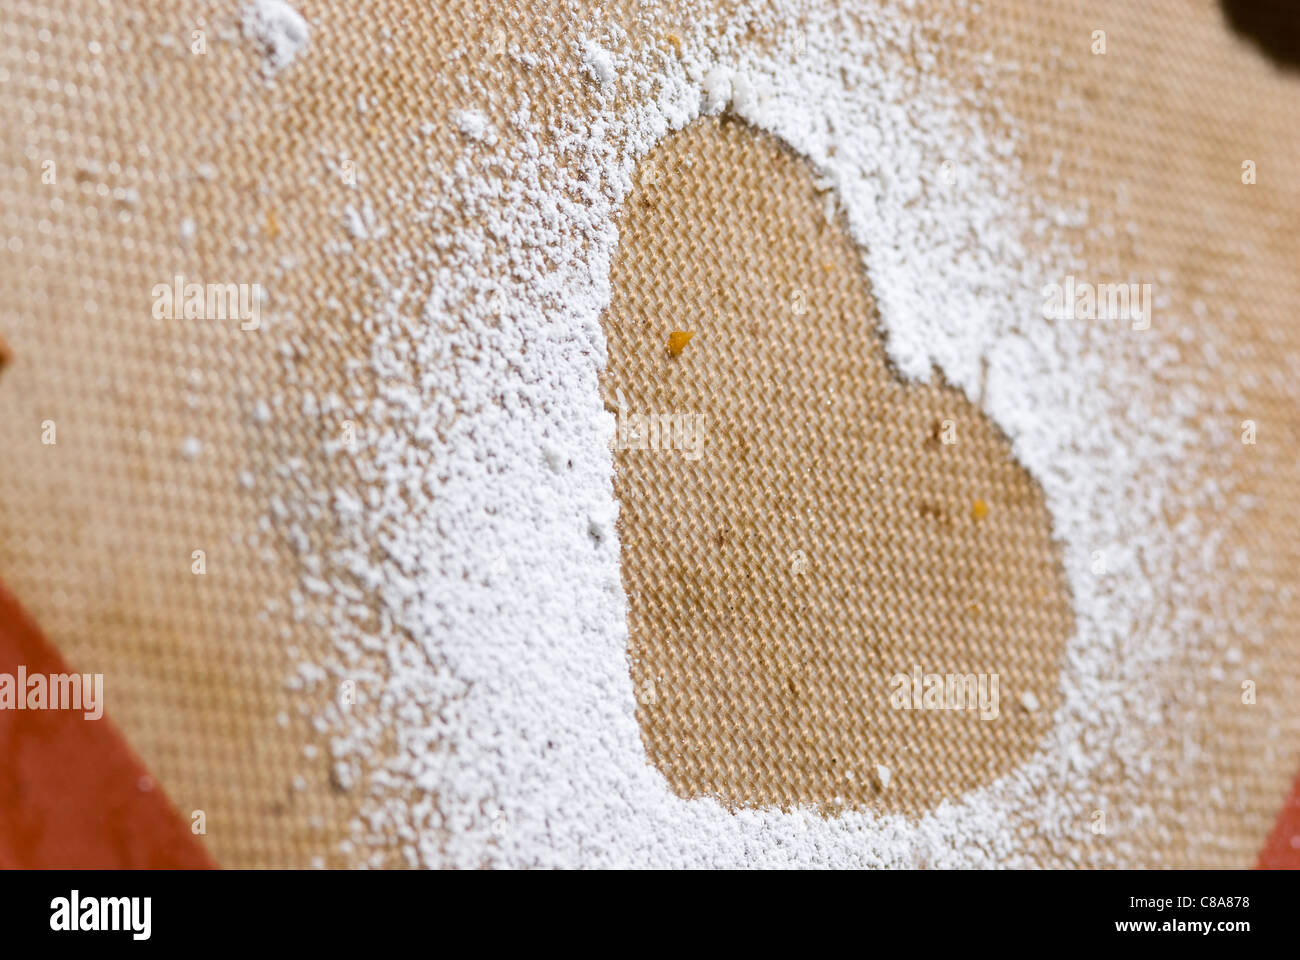 Heart-shaped mark in icing sugar Stock Photo